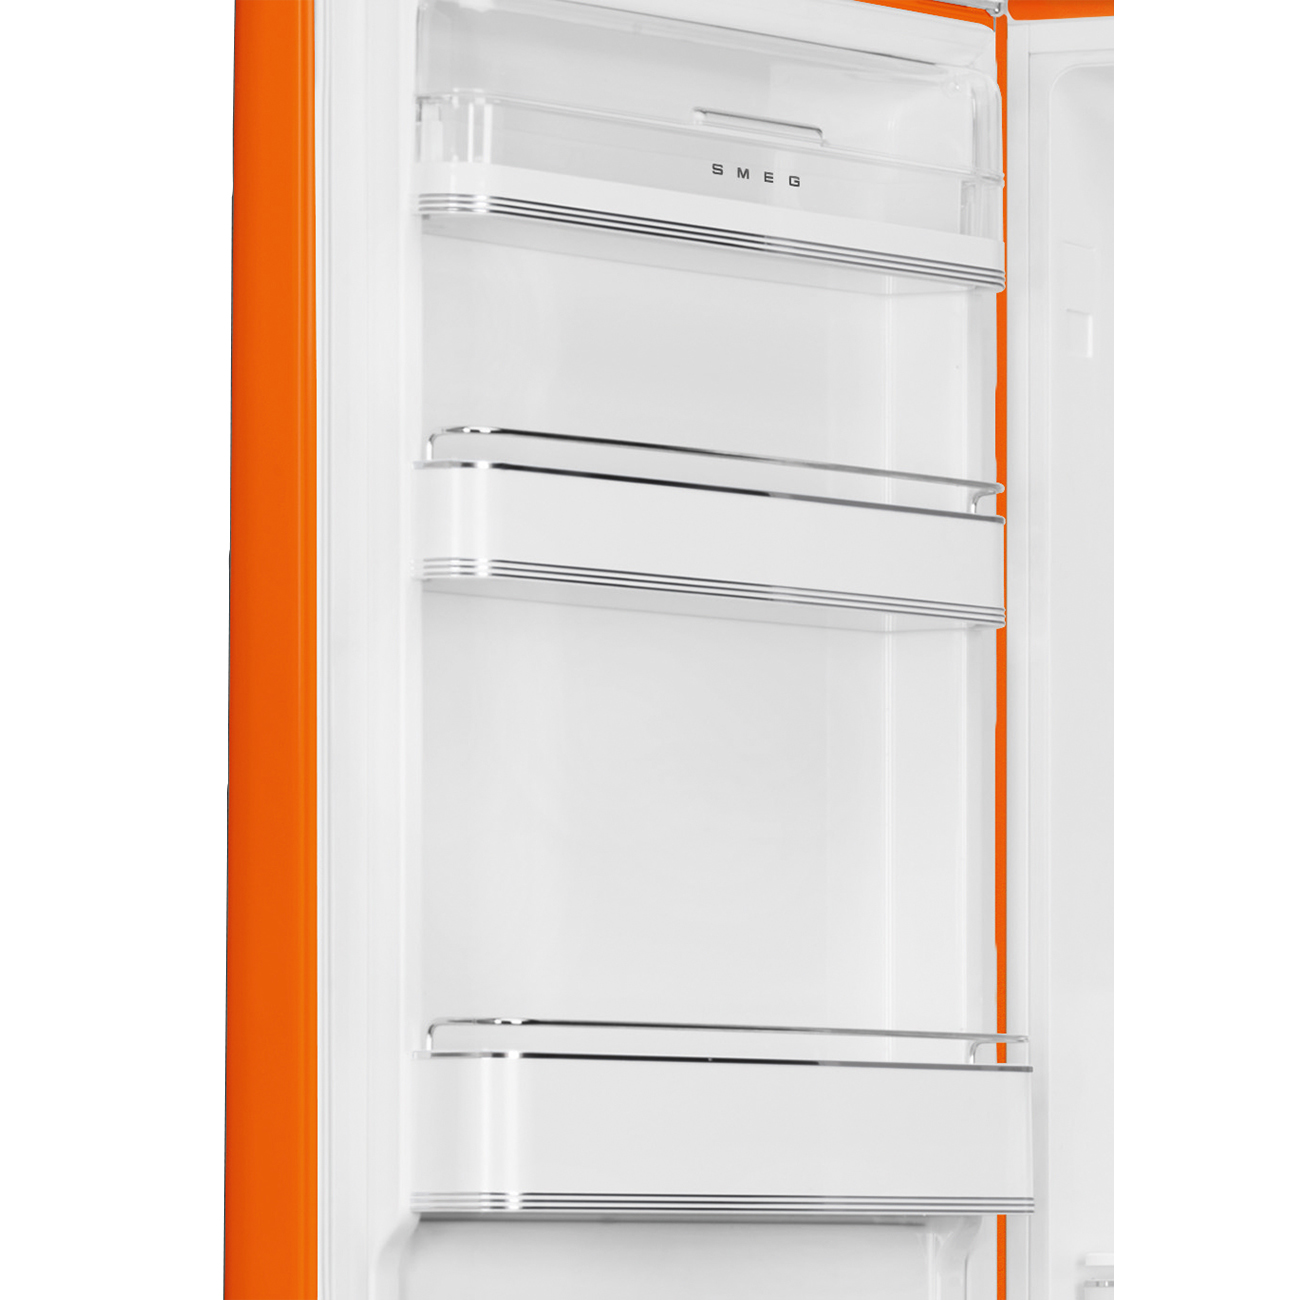 Oranje koelkast - Smeg_2